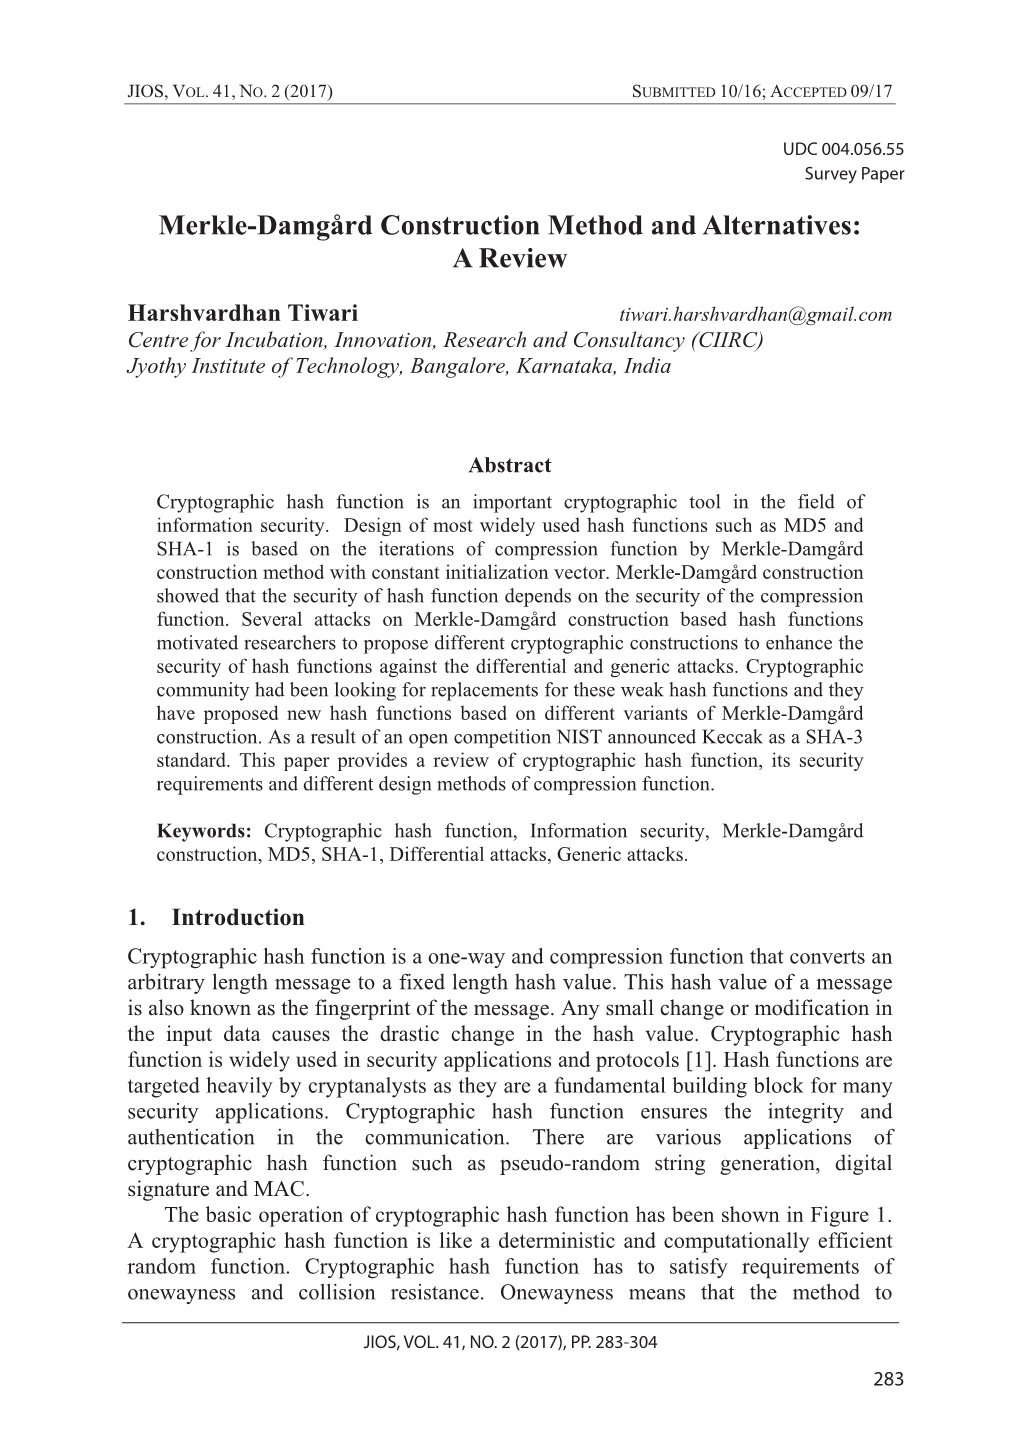 Merkle-Damgård Construction Method and Alternatives: a Review